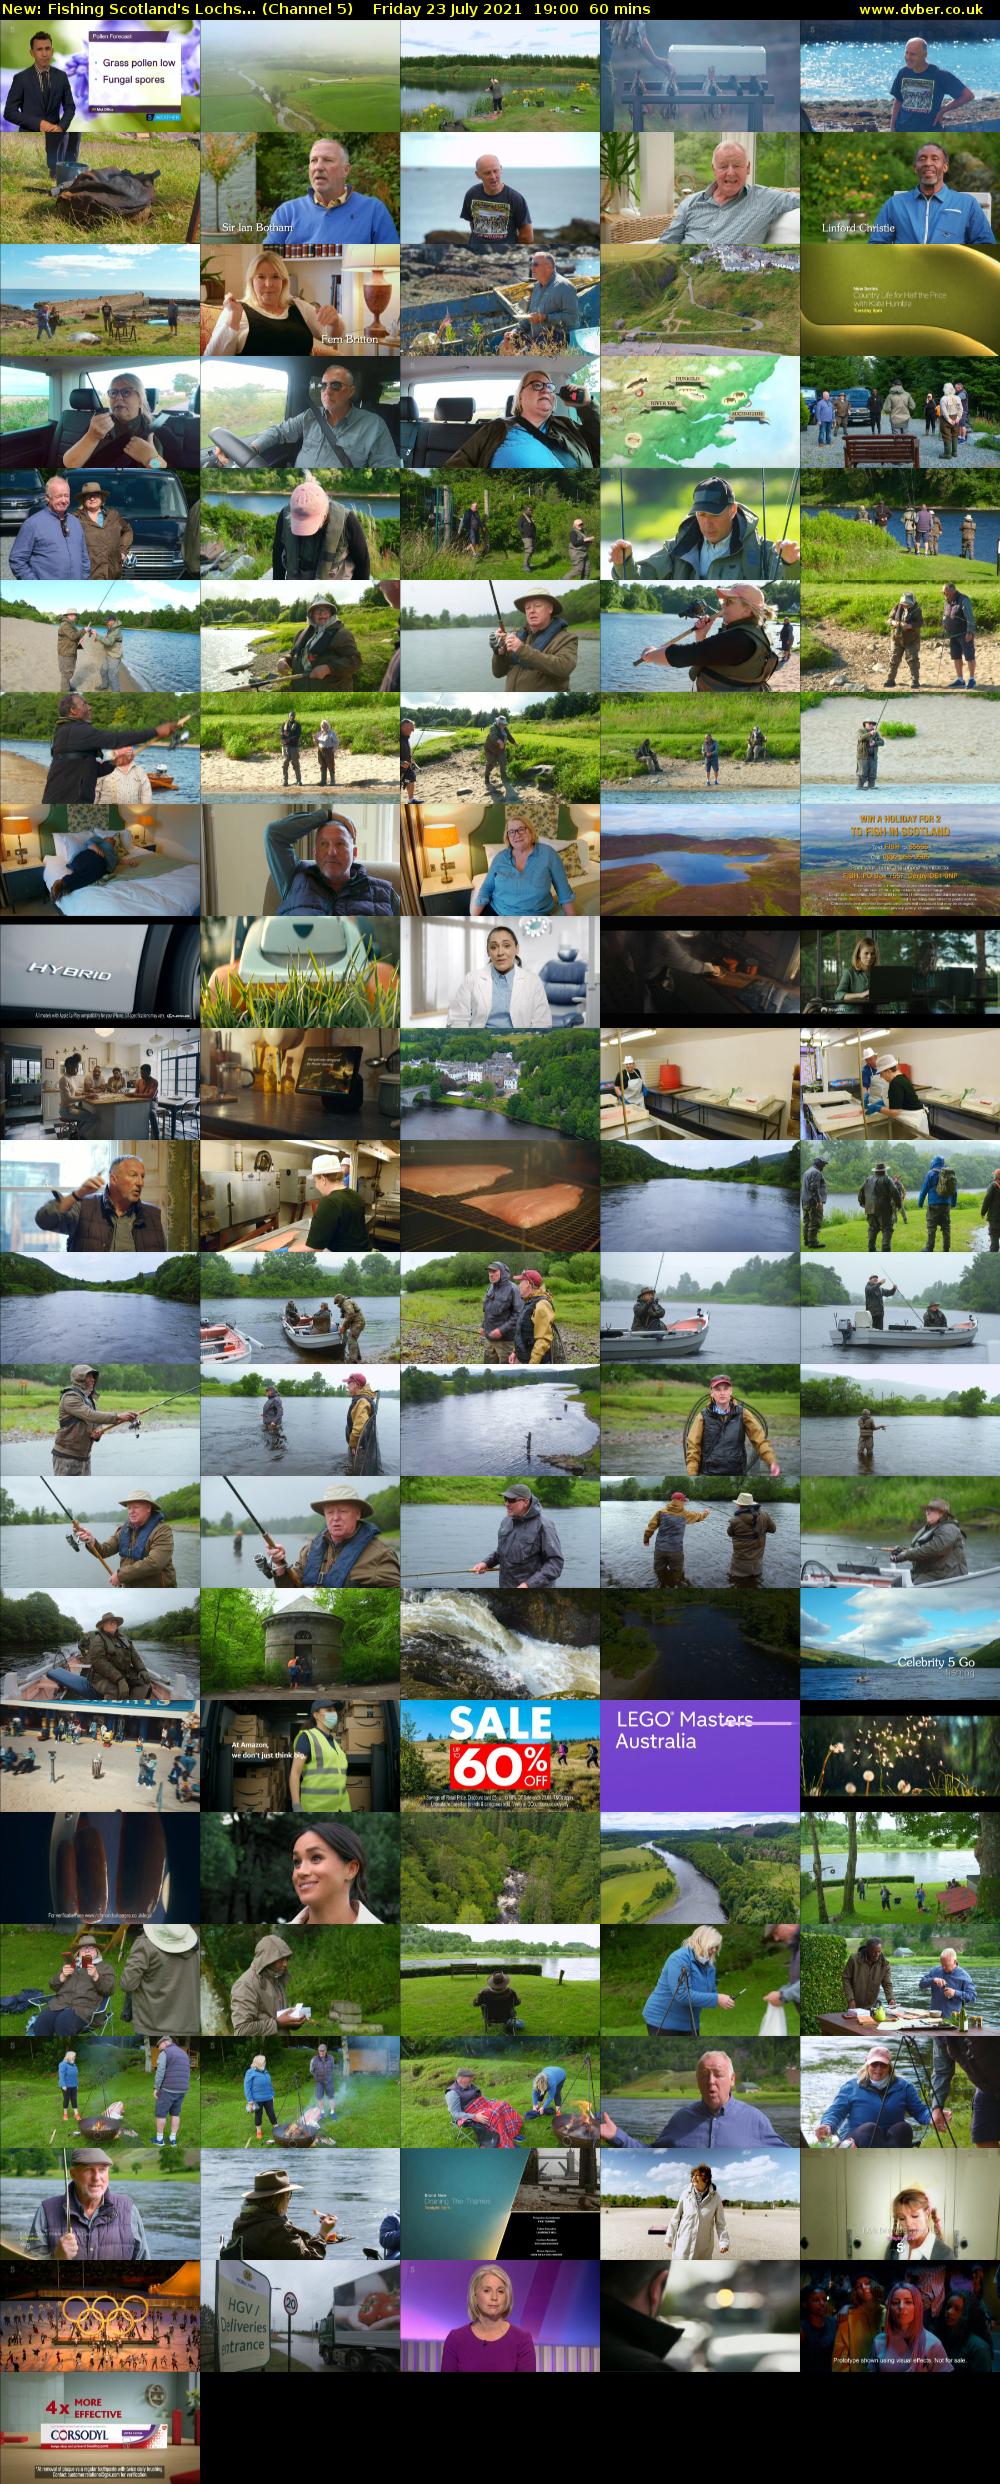 Fishing Scotland's Lochs... (Channel 5) Friday 23 July 2021 19:00 - 20:00